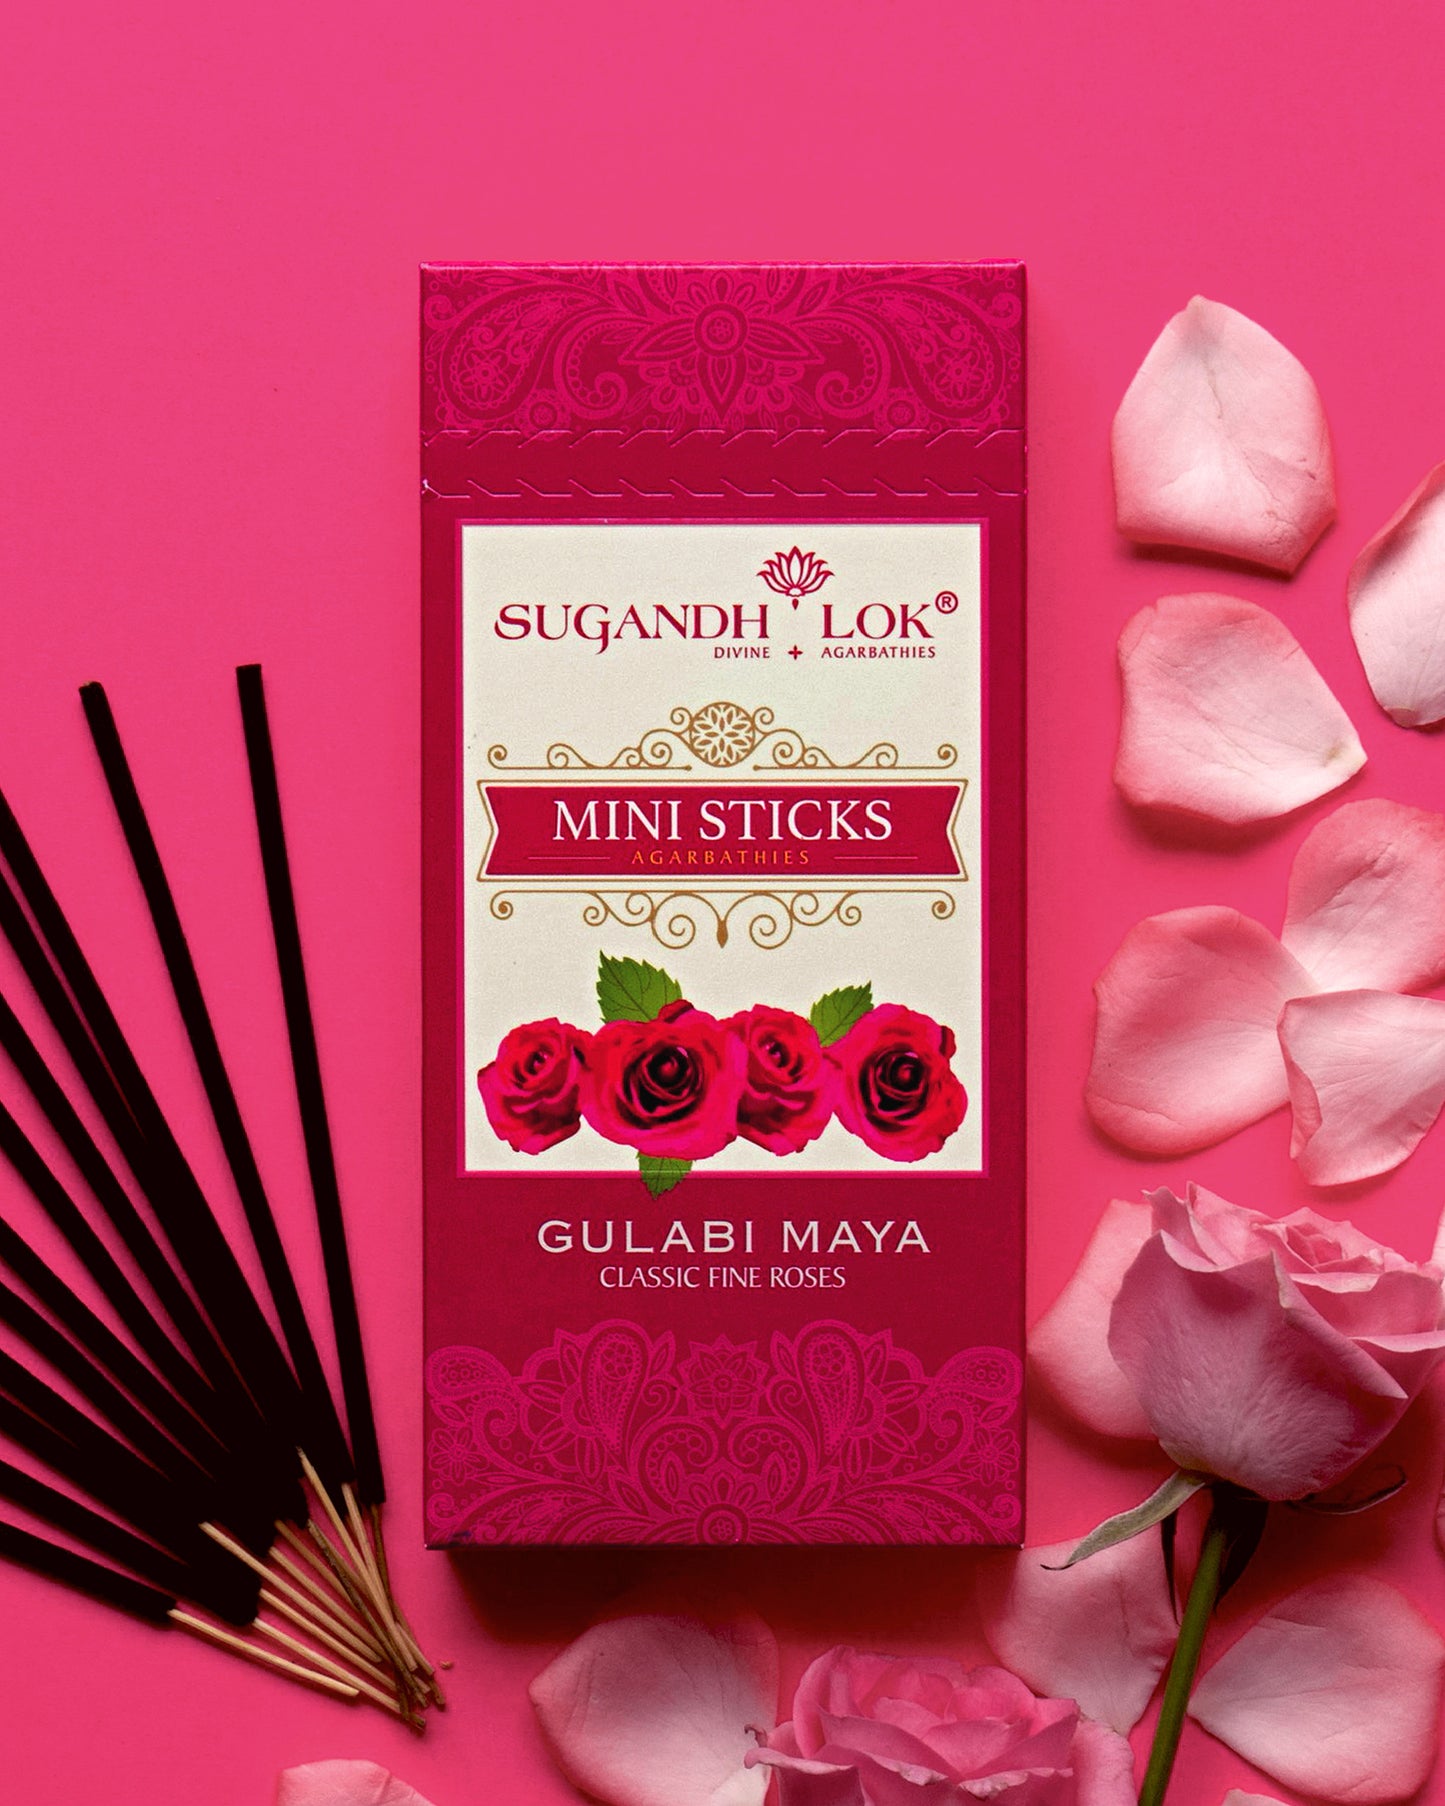 Gulabi Maya Agarbatti Mini Sticks Box surrounded by rose petals